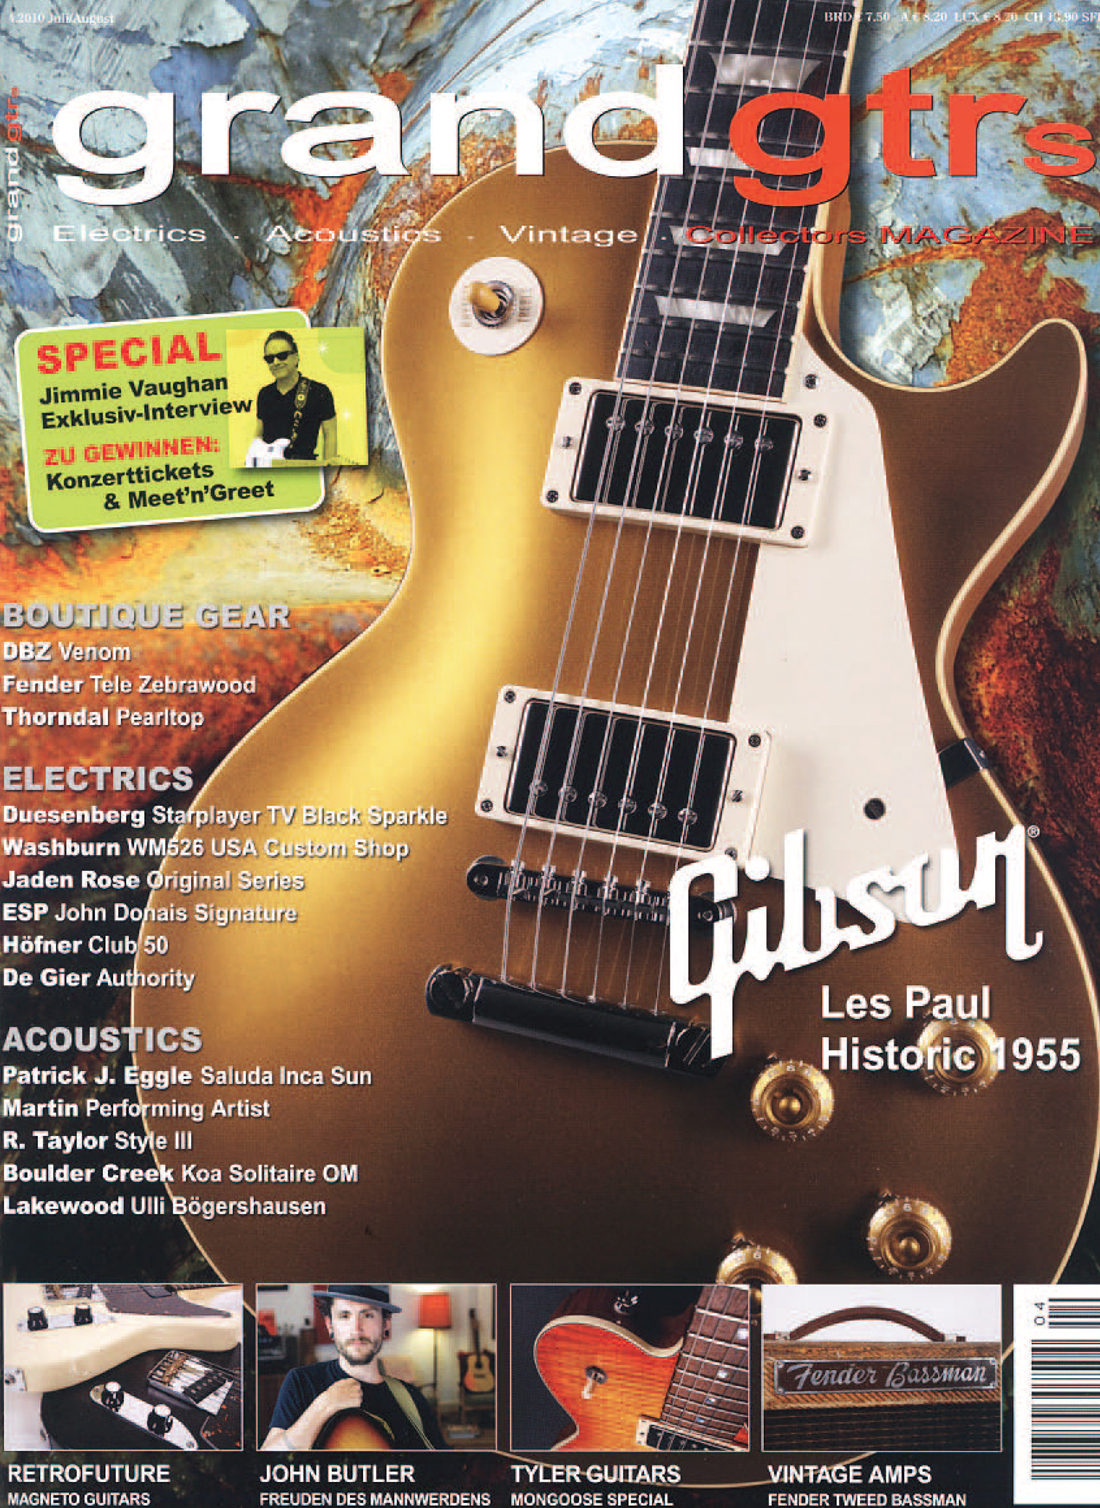 Copy of 2010 Grand Guitars